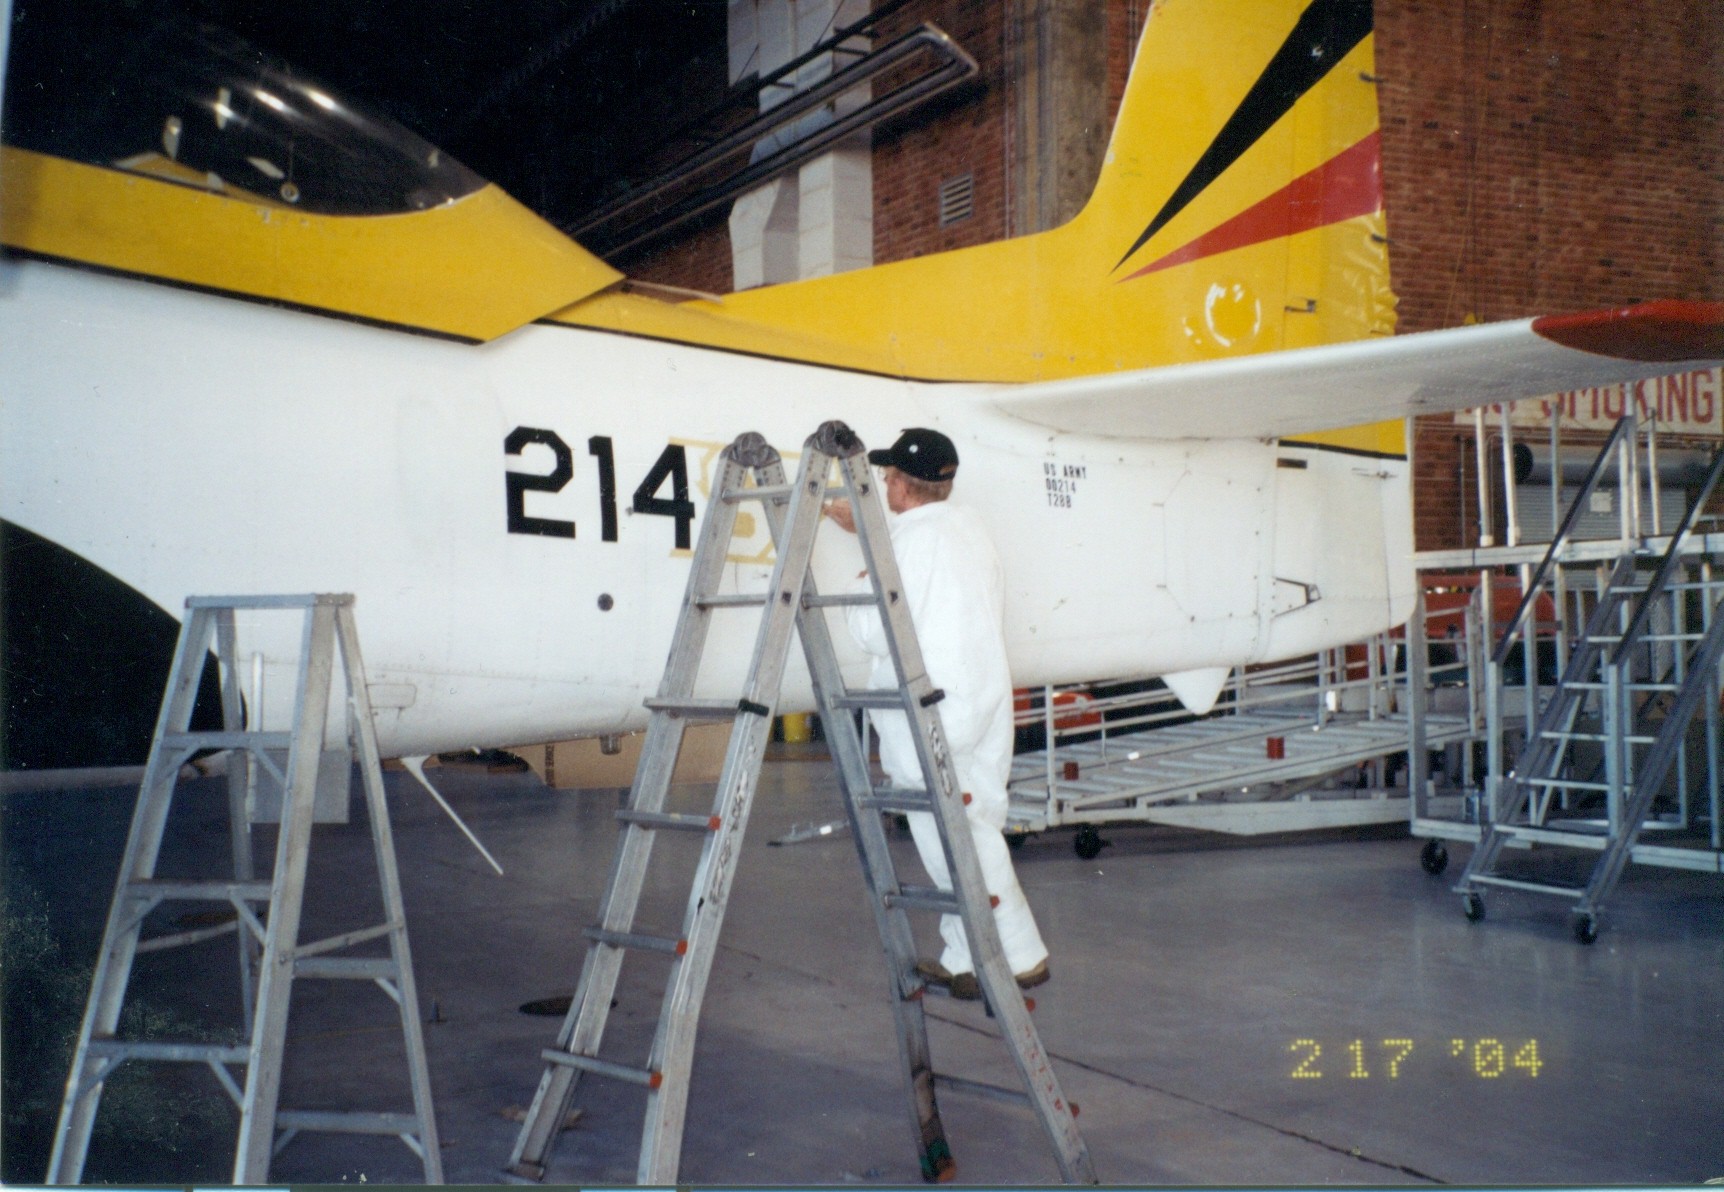 North American T-28 Trojan – Air Heritage Aviation Museum